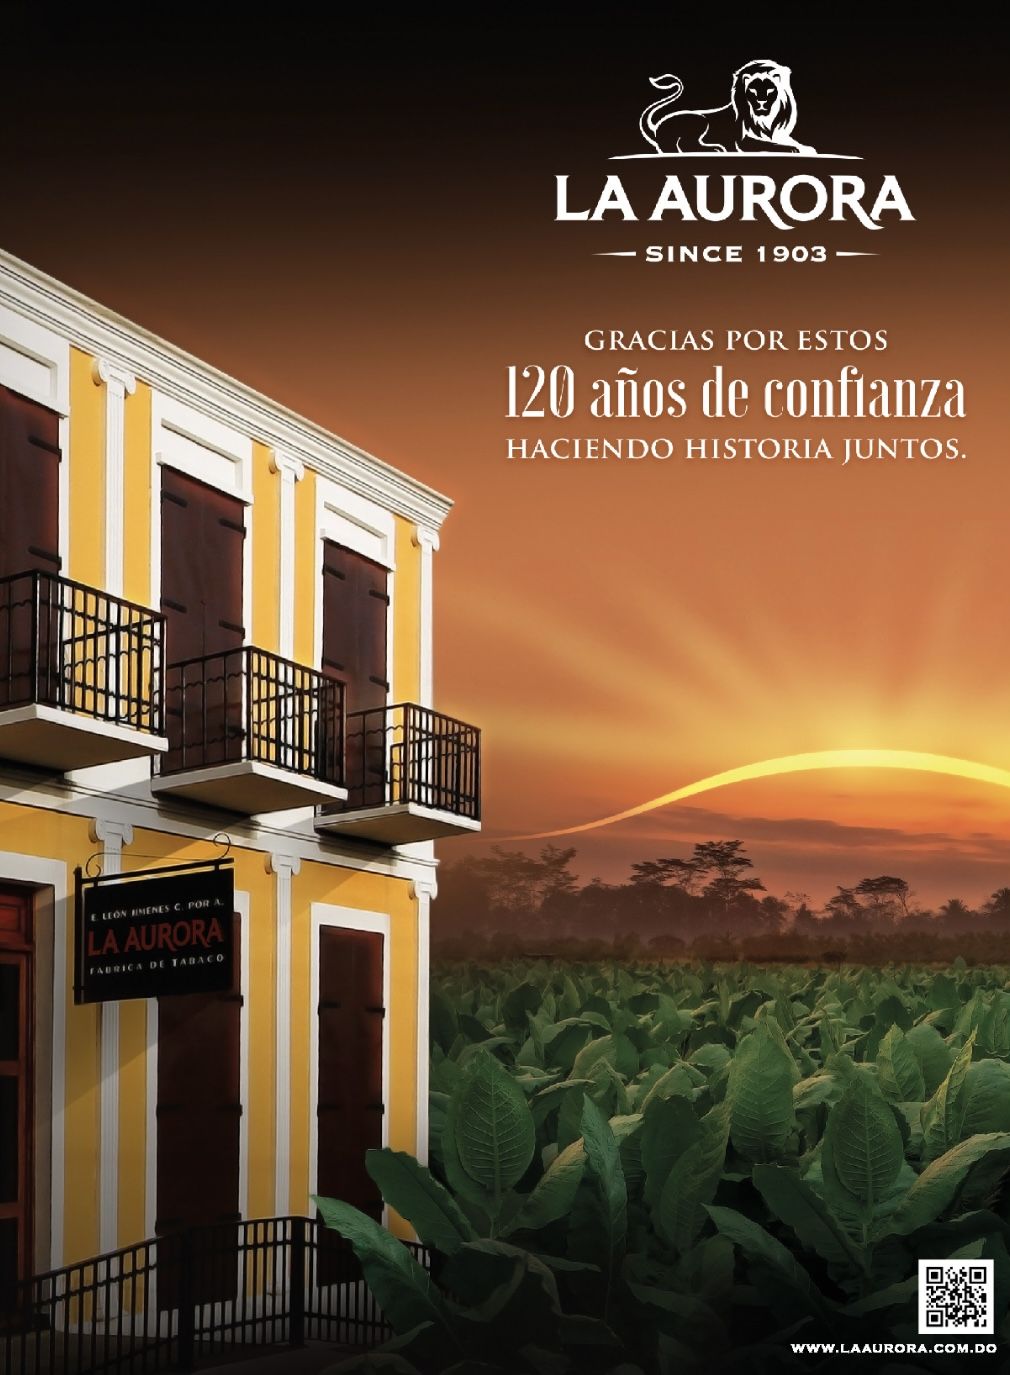 La Aurora Since 1903